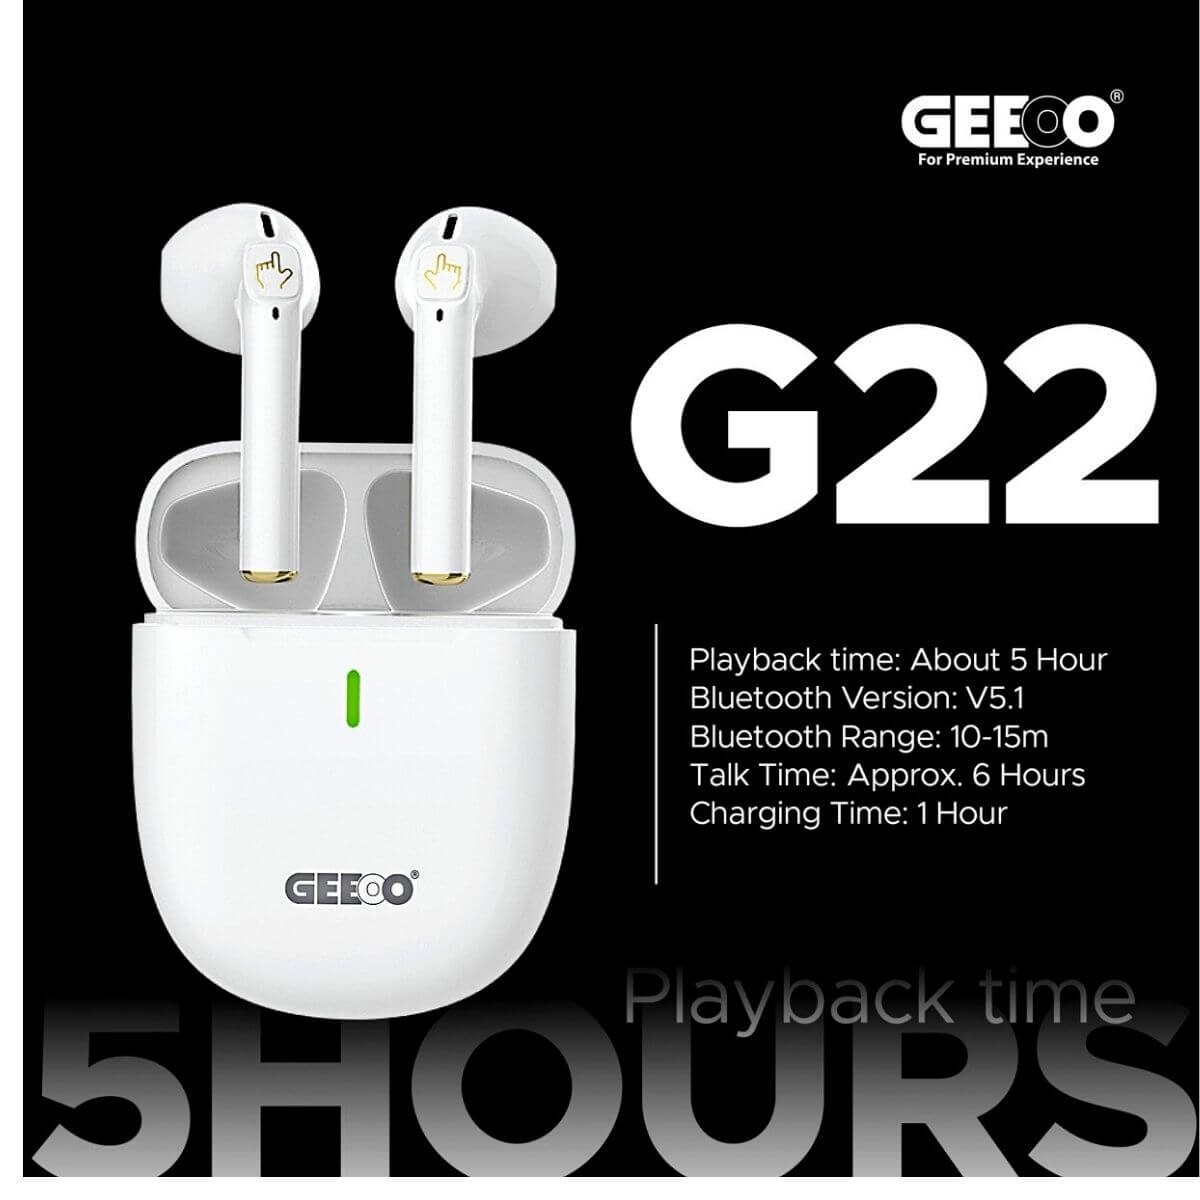 Geeoo G22 Earbuds Bd